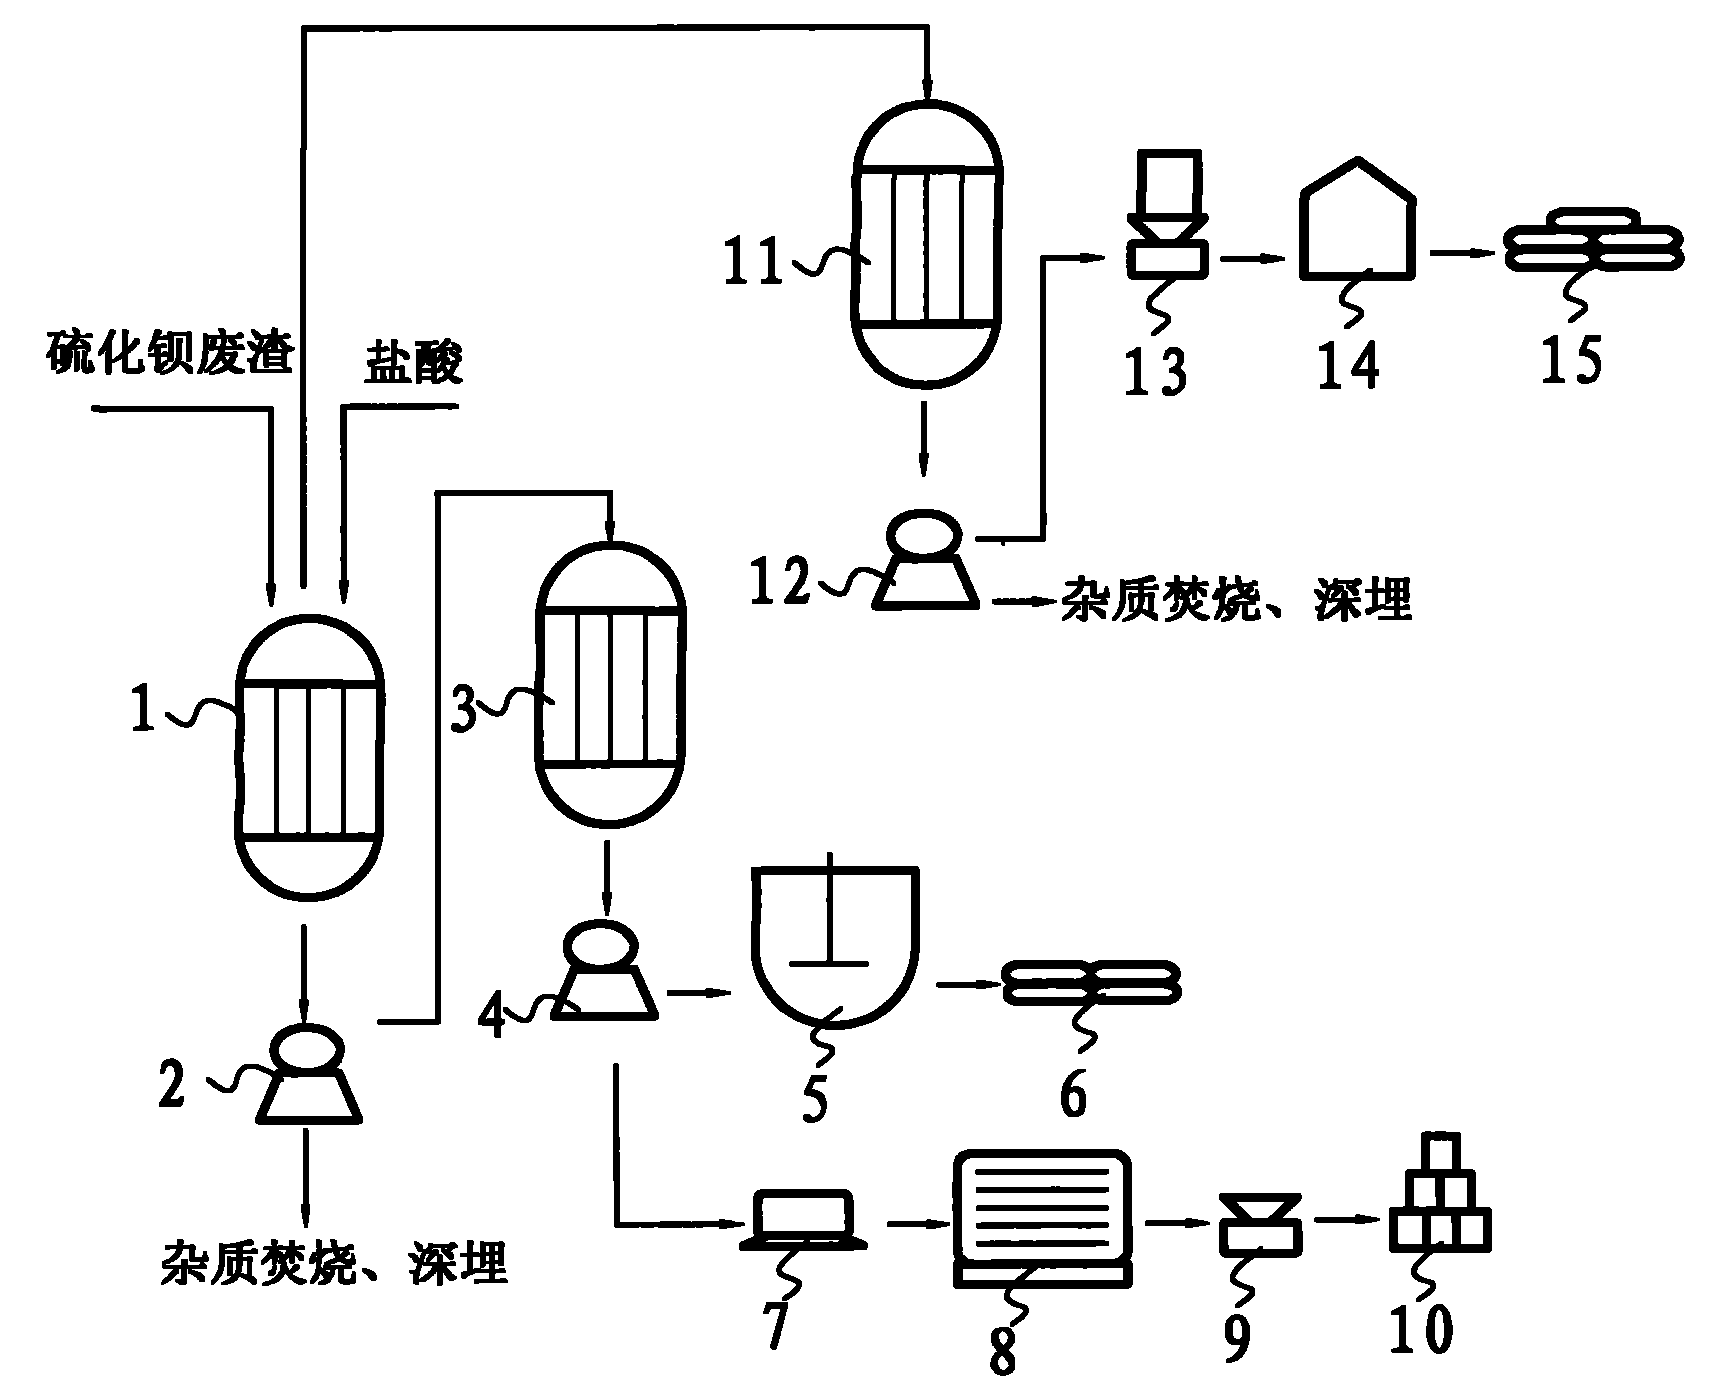 Method for coproducing sodium sulphide and industrial salts while preparing precipitated barium sulfate from barium sulfide waste slag